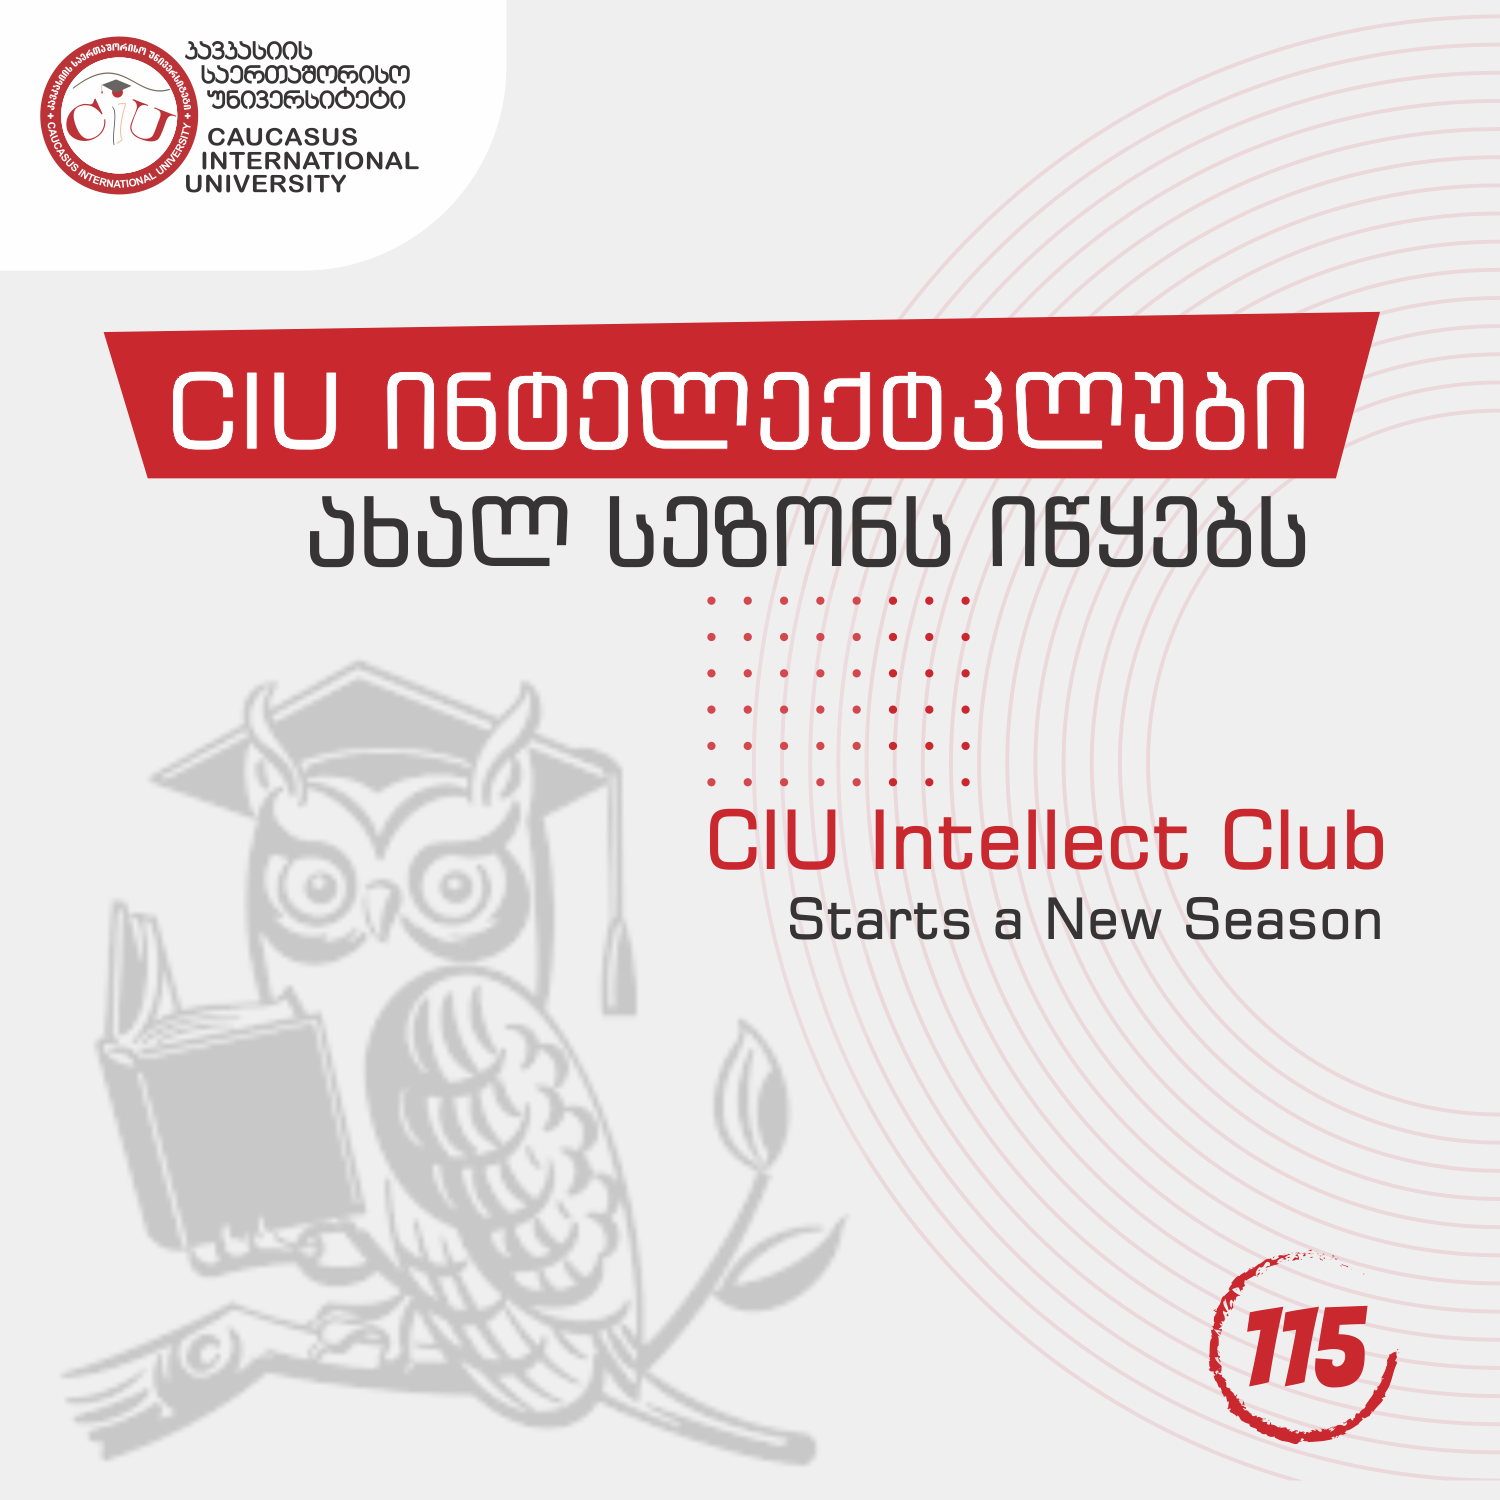 CIU Intellect Club starts a new season